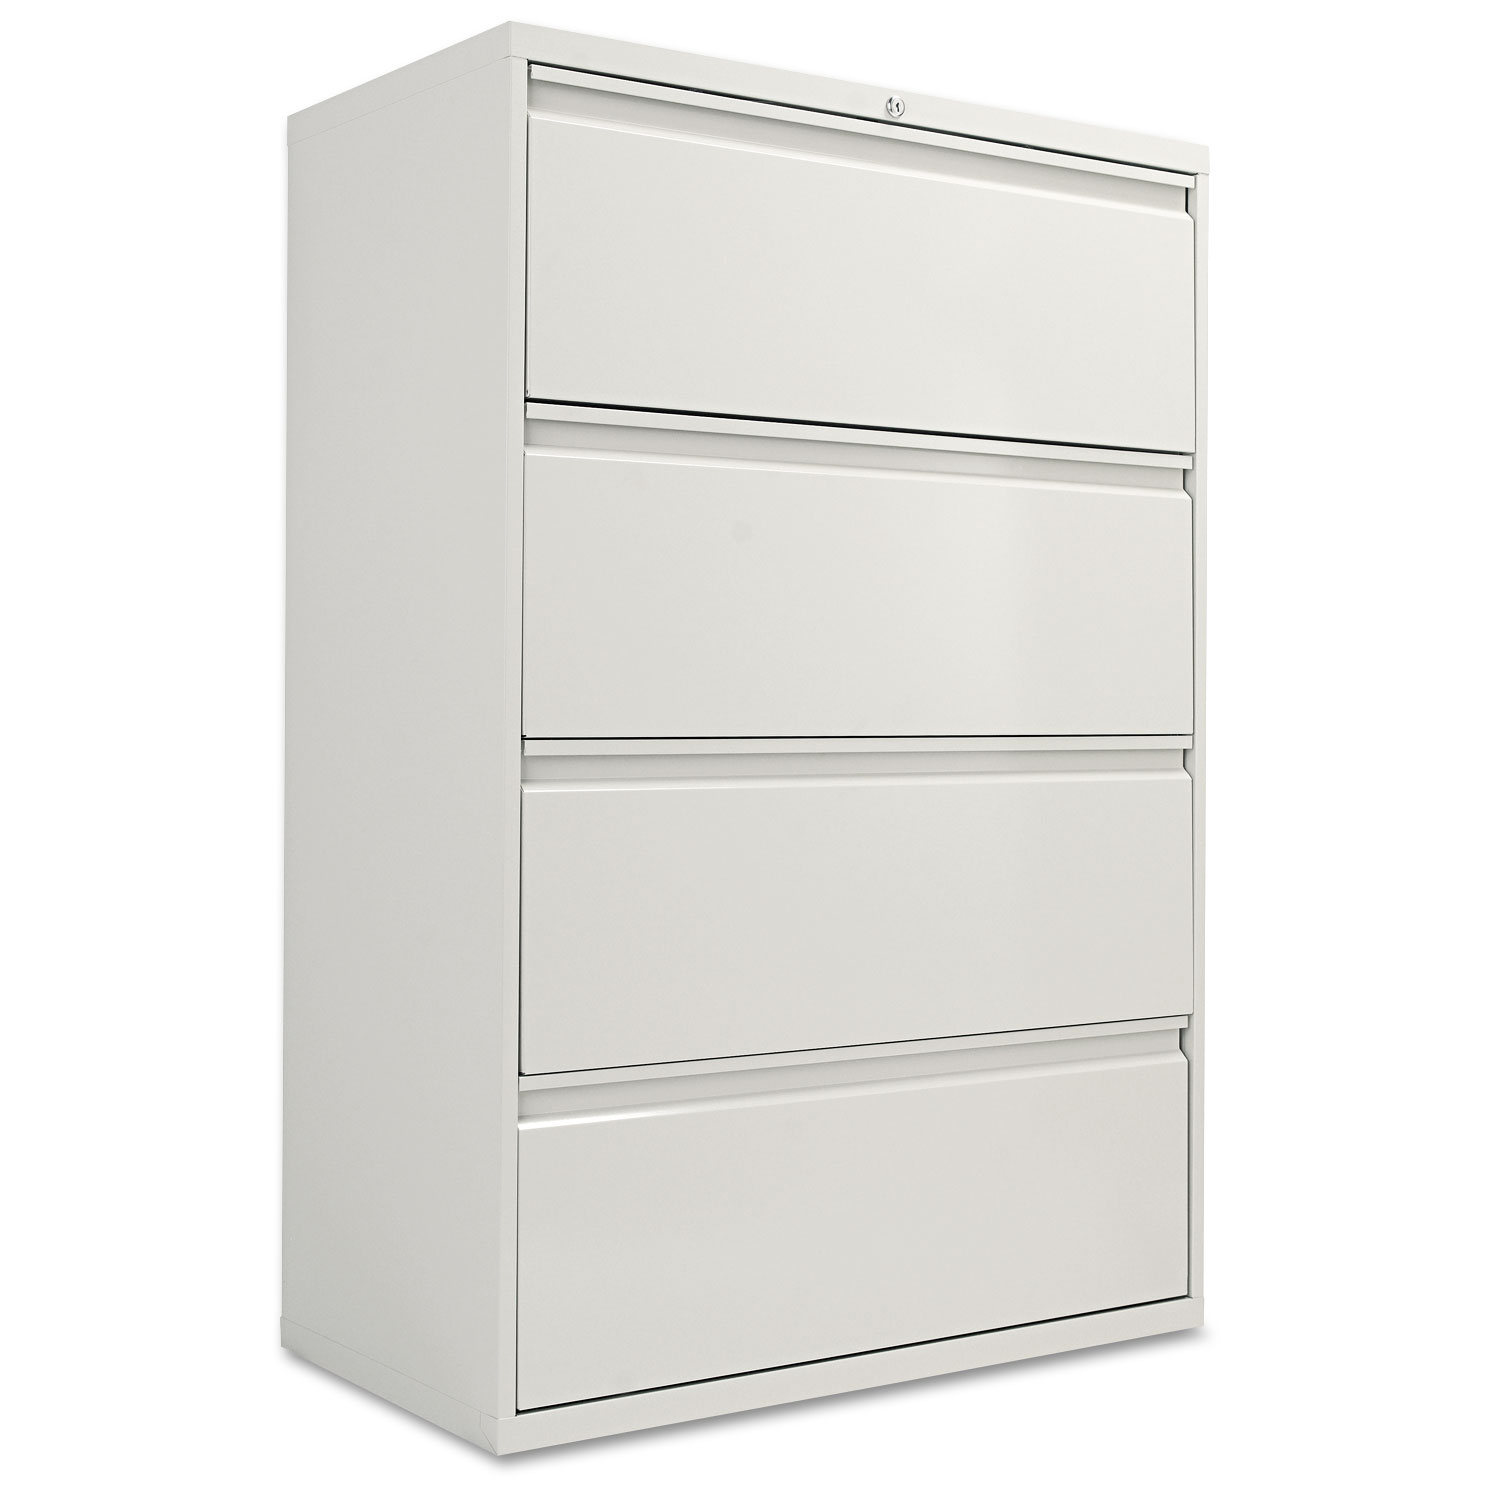  Alera ALELF3654LG Four-Drawer Lateral File Cabinet, 36w x 18d x 52.5h, Light Gray (ALELF3654LG) 